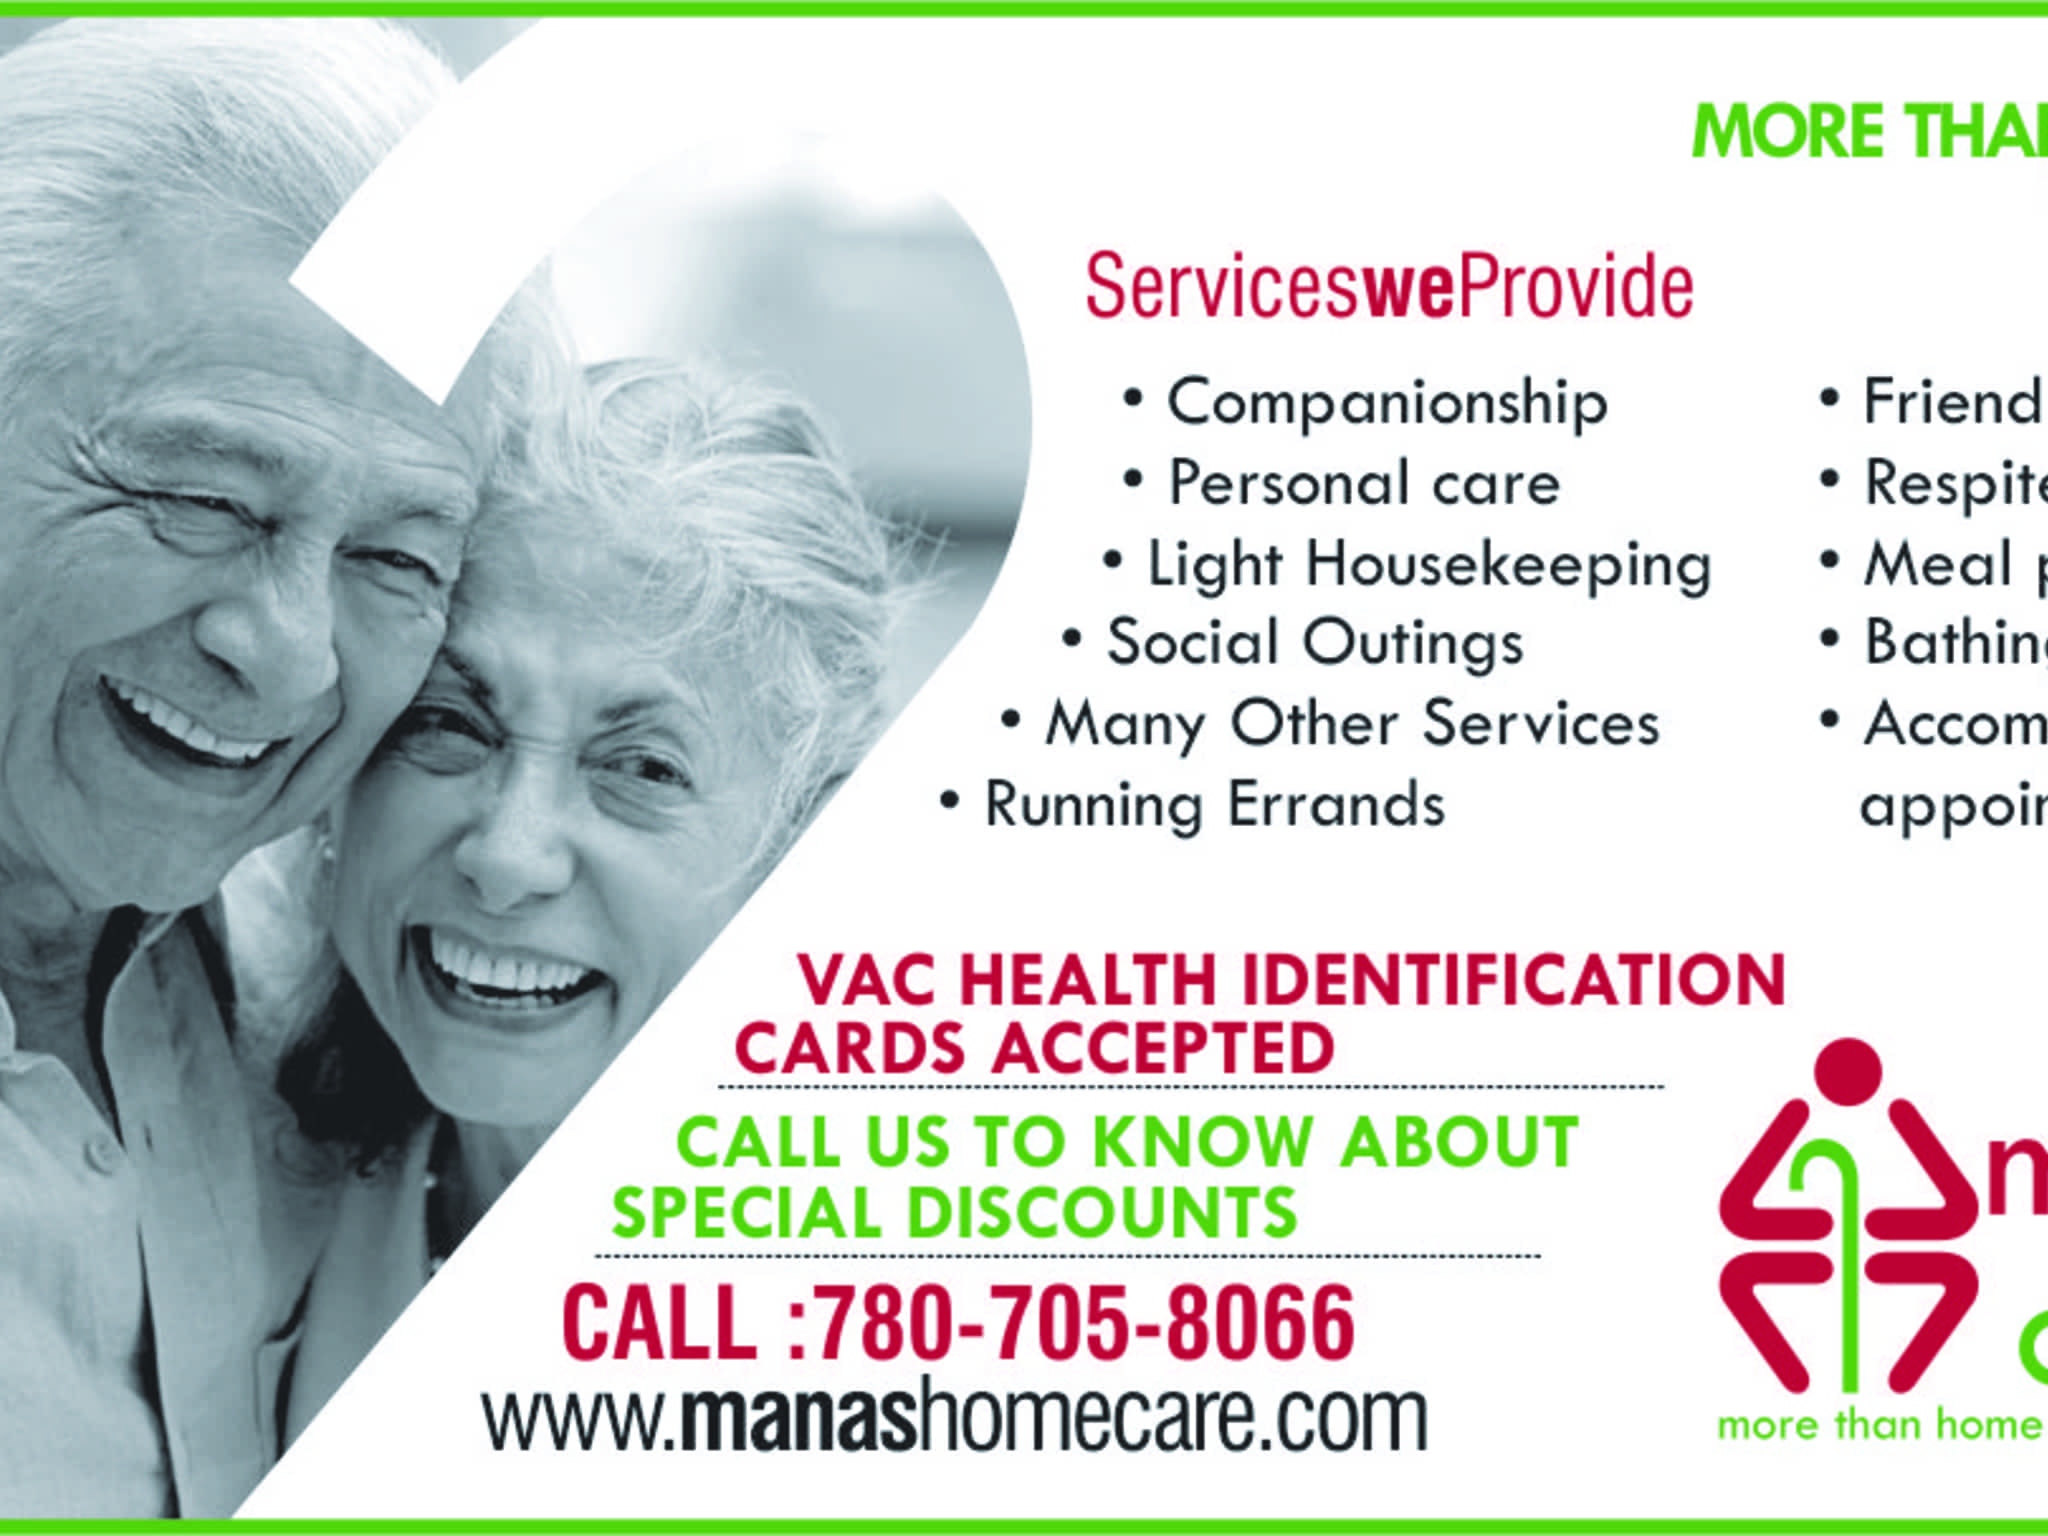 photo Manas Home Care Services Ltd